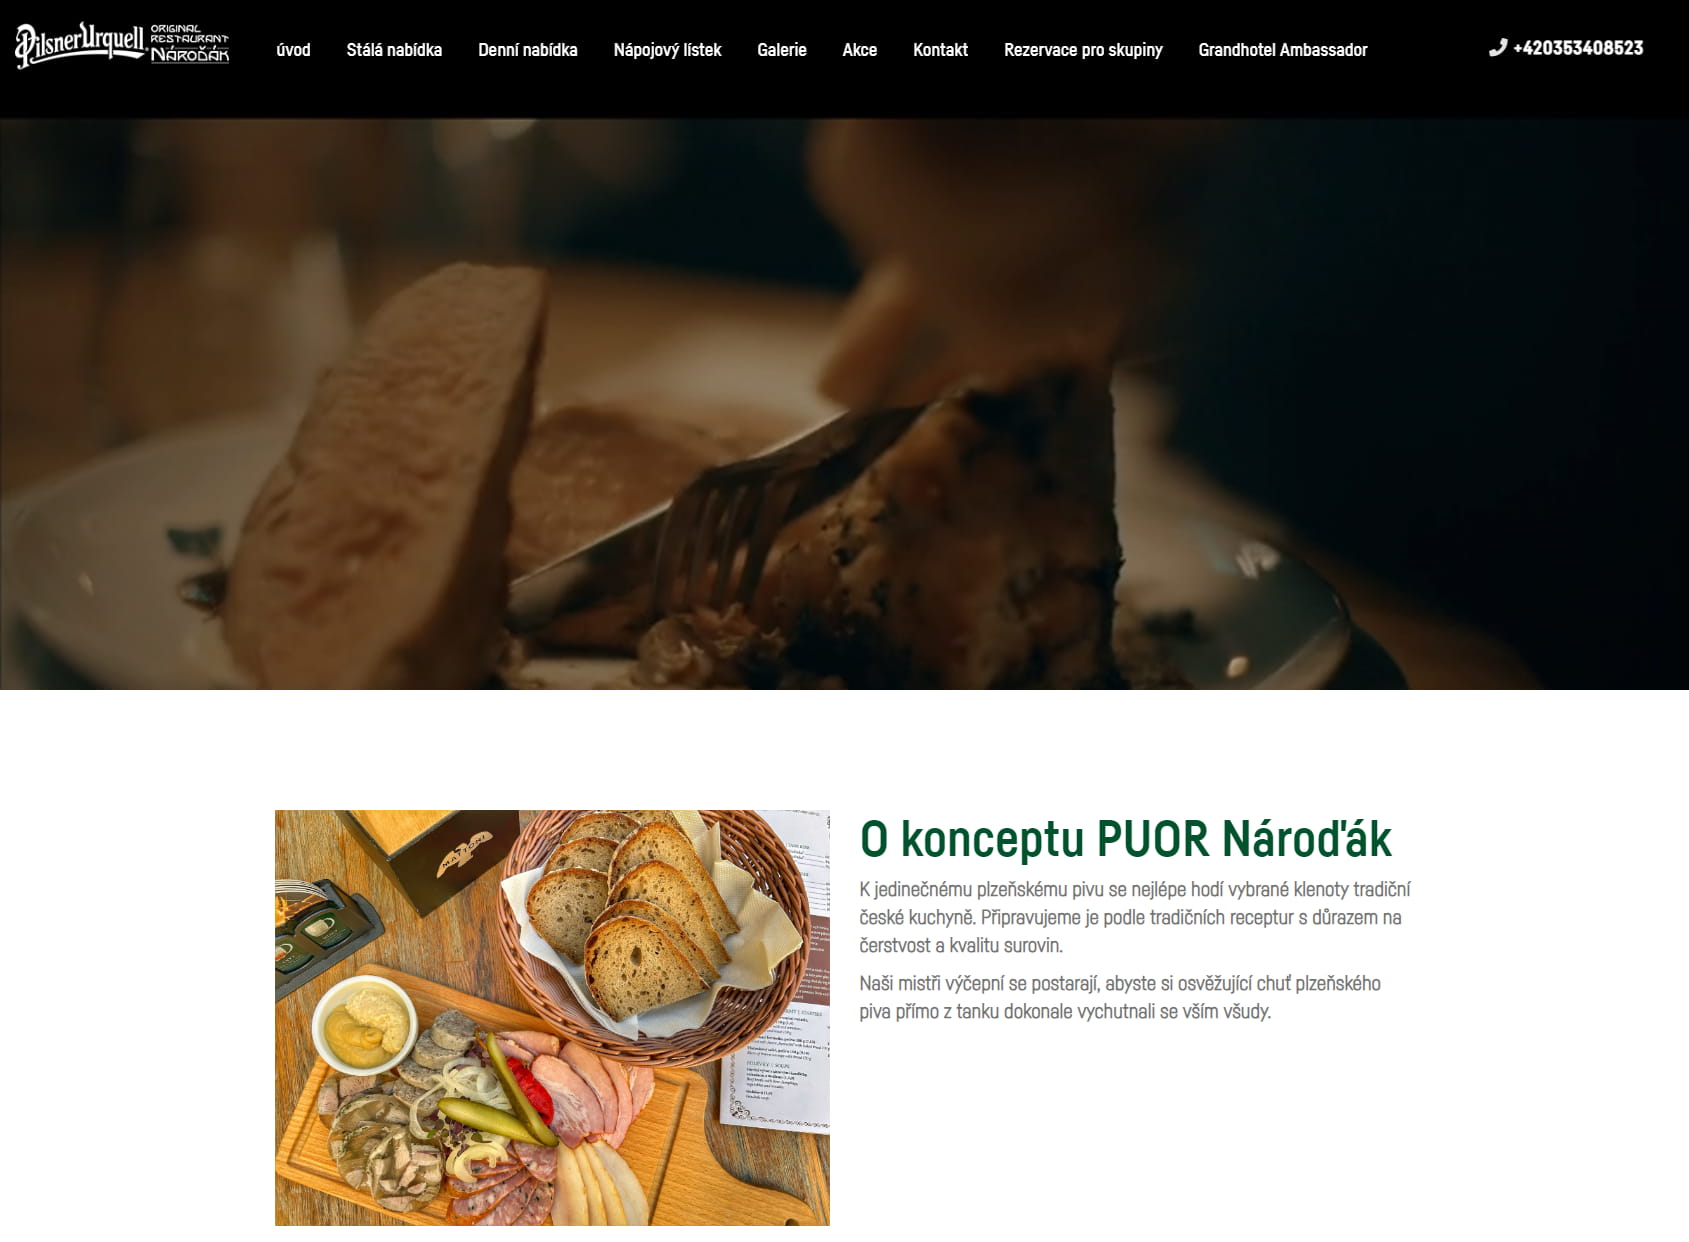 Pilsner Urquell Original Restaurant - Nároďák